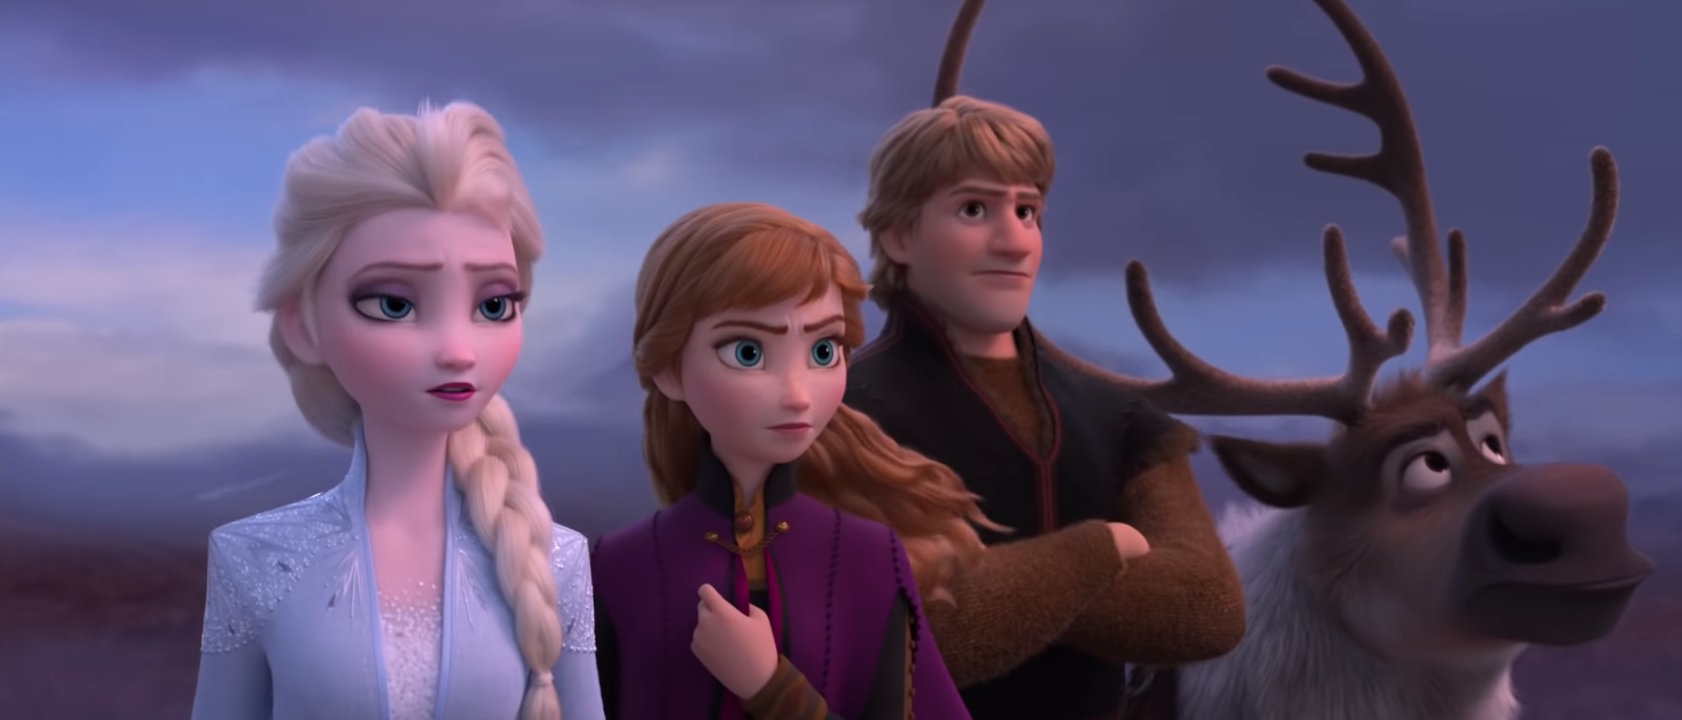 Disney's "Frozen 2" thrills Sámi people in northern Europe